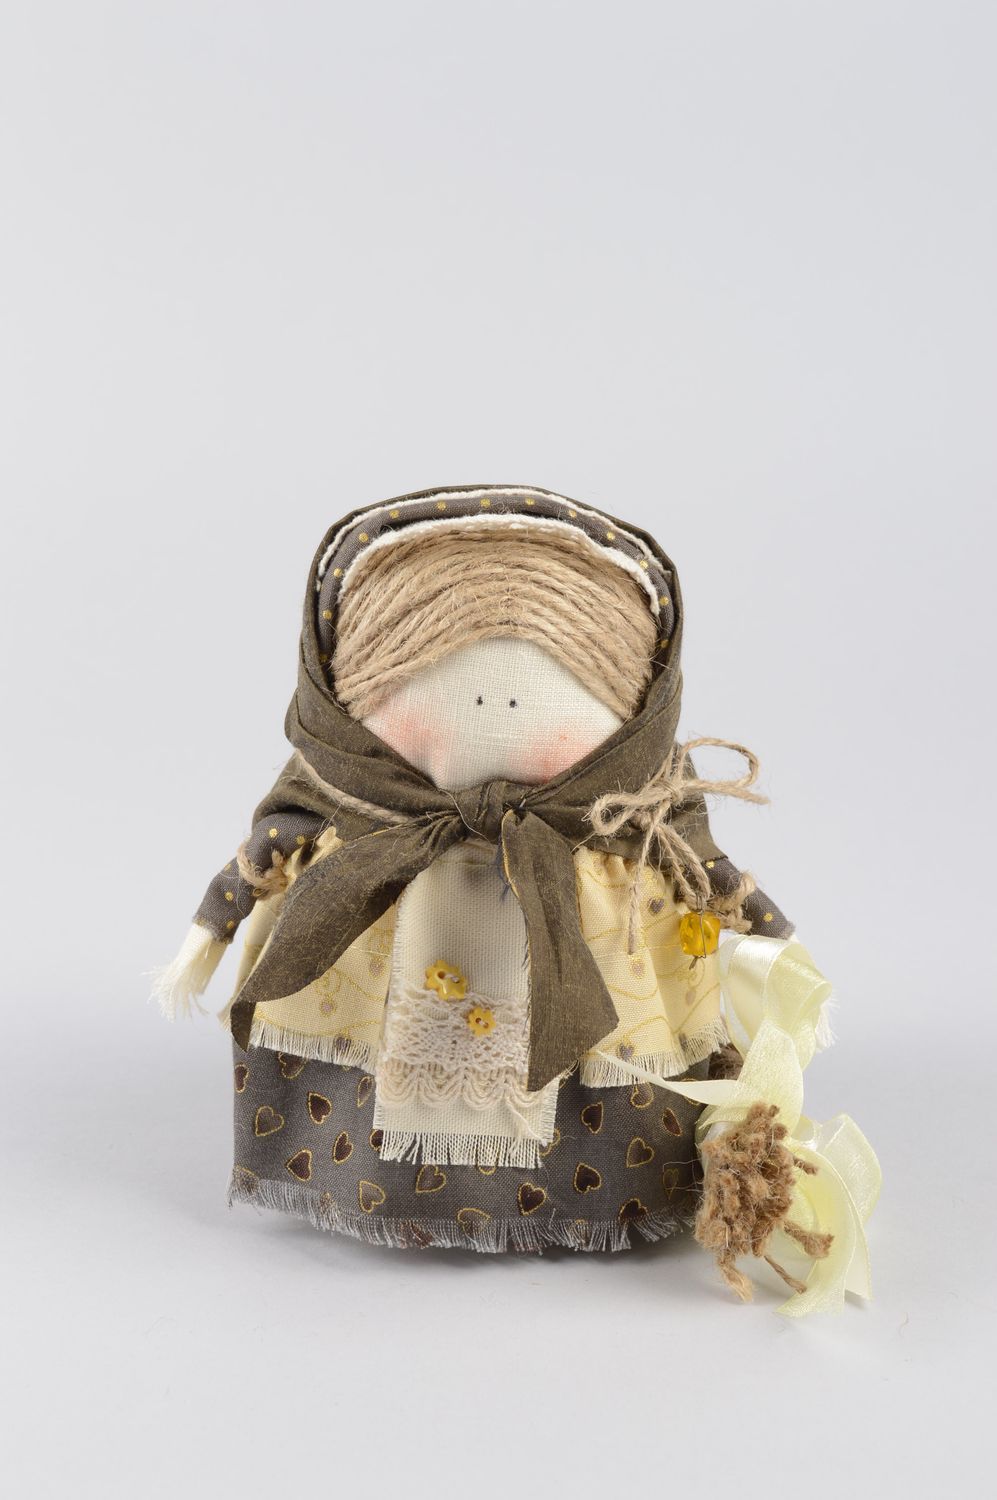 Handmade doll designer doll for children decorative use only gift ideas photo 1